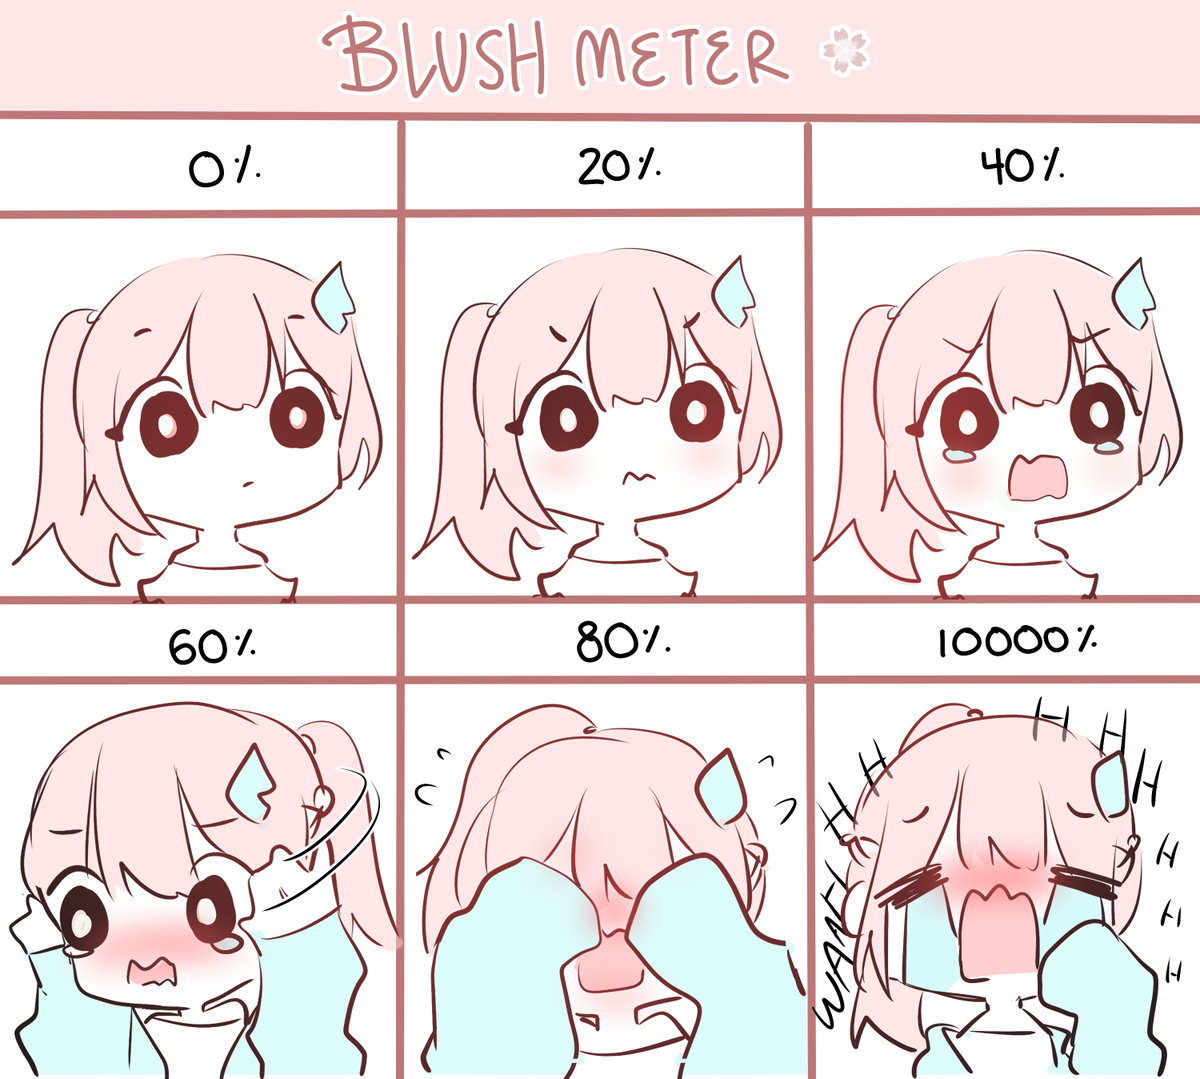 blush-meter-meme-anime-black-swirl-in-gacha-life